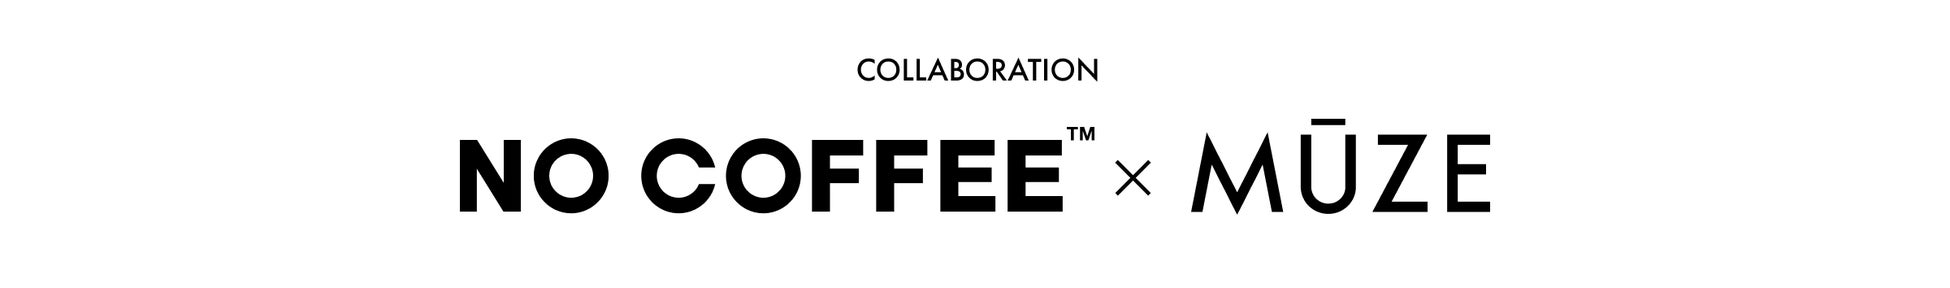 CBDブランドのMUZEとNO COFFEEがコラボレーション。頭や首肩ケア用のCBDロールオンを新発売